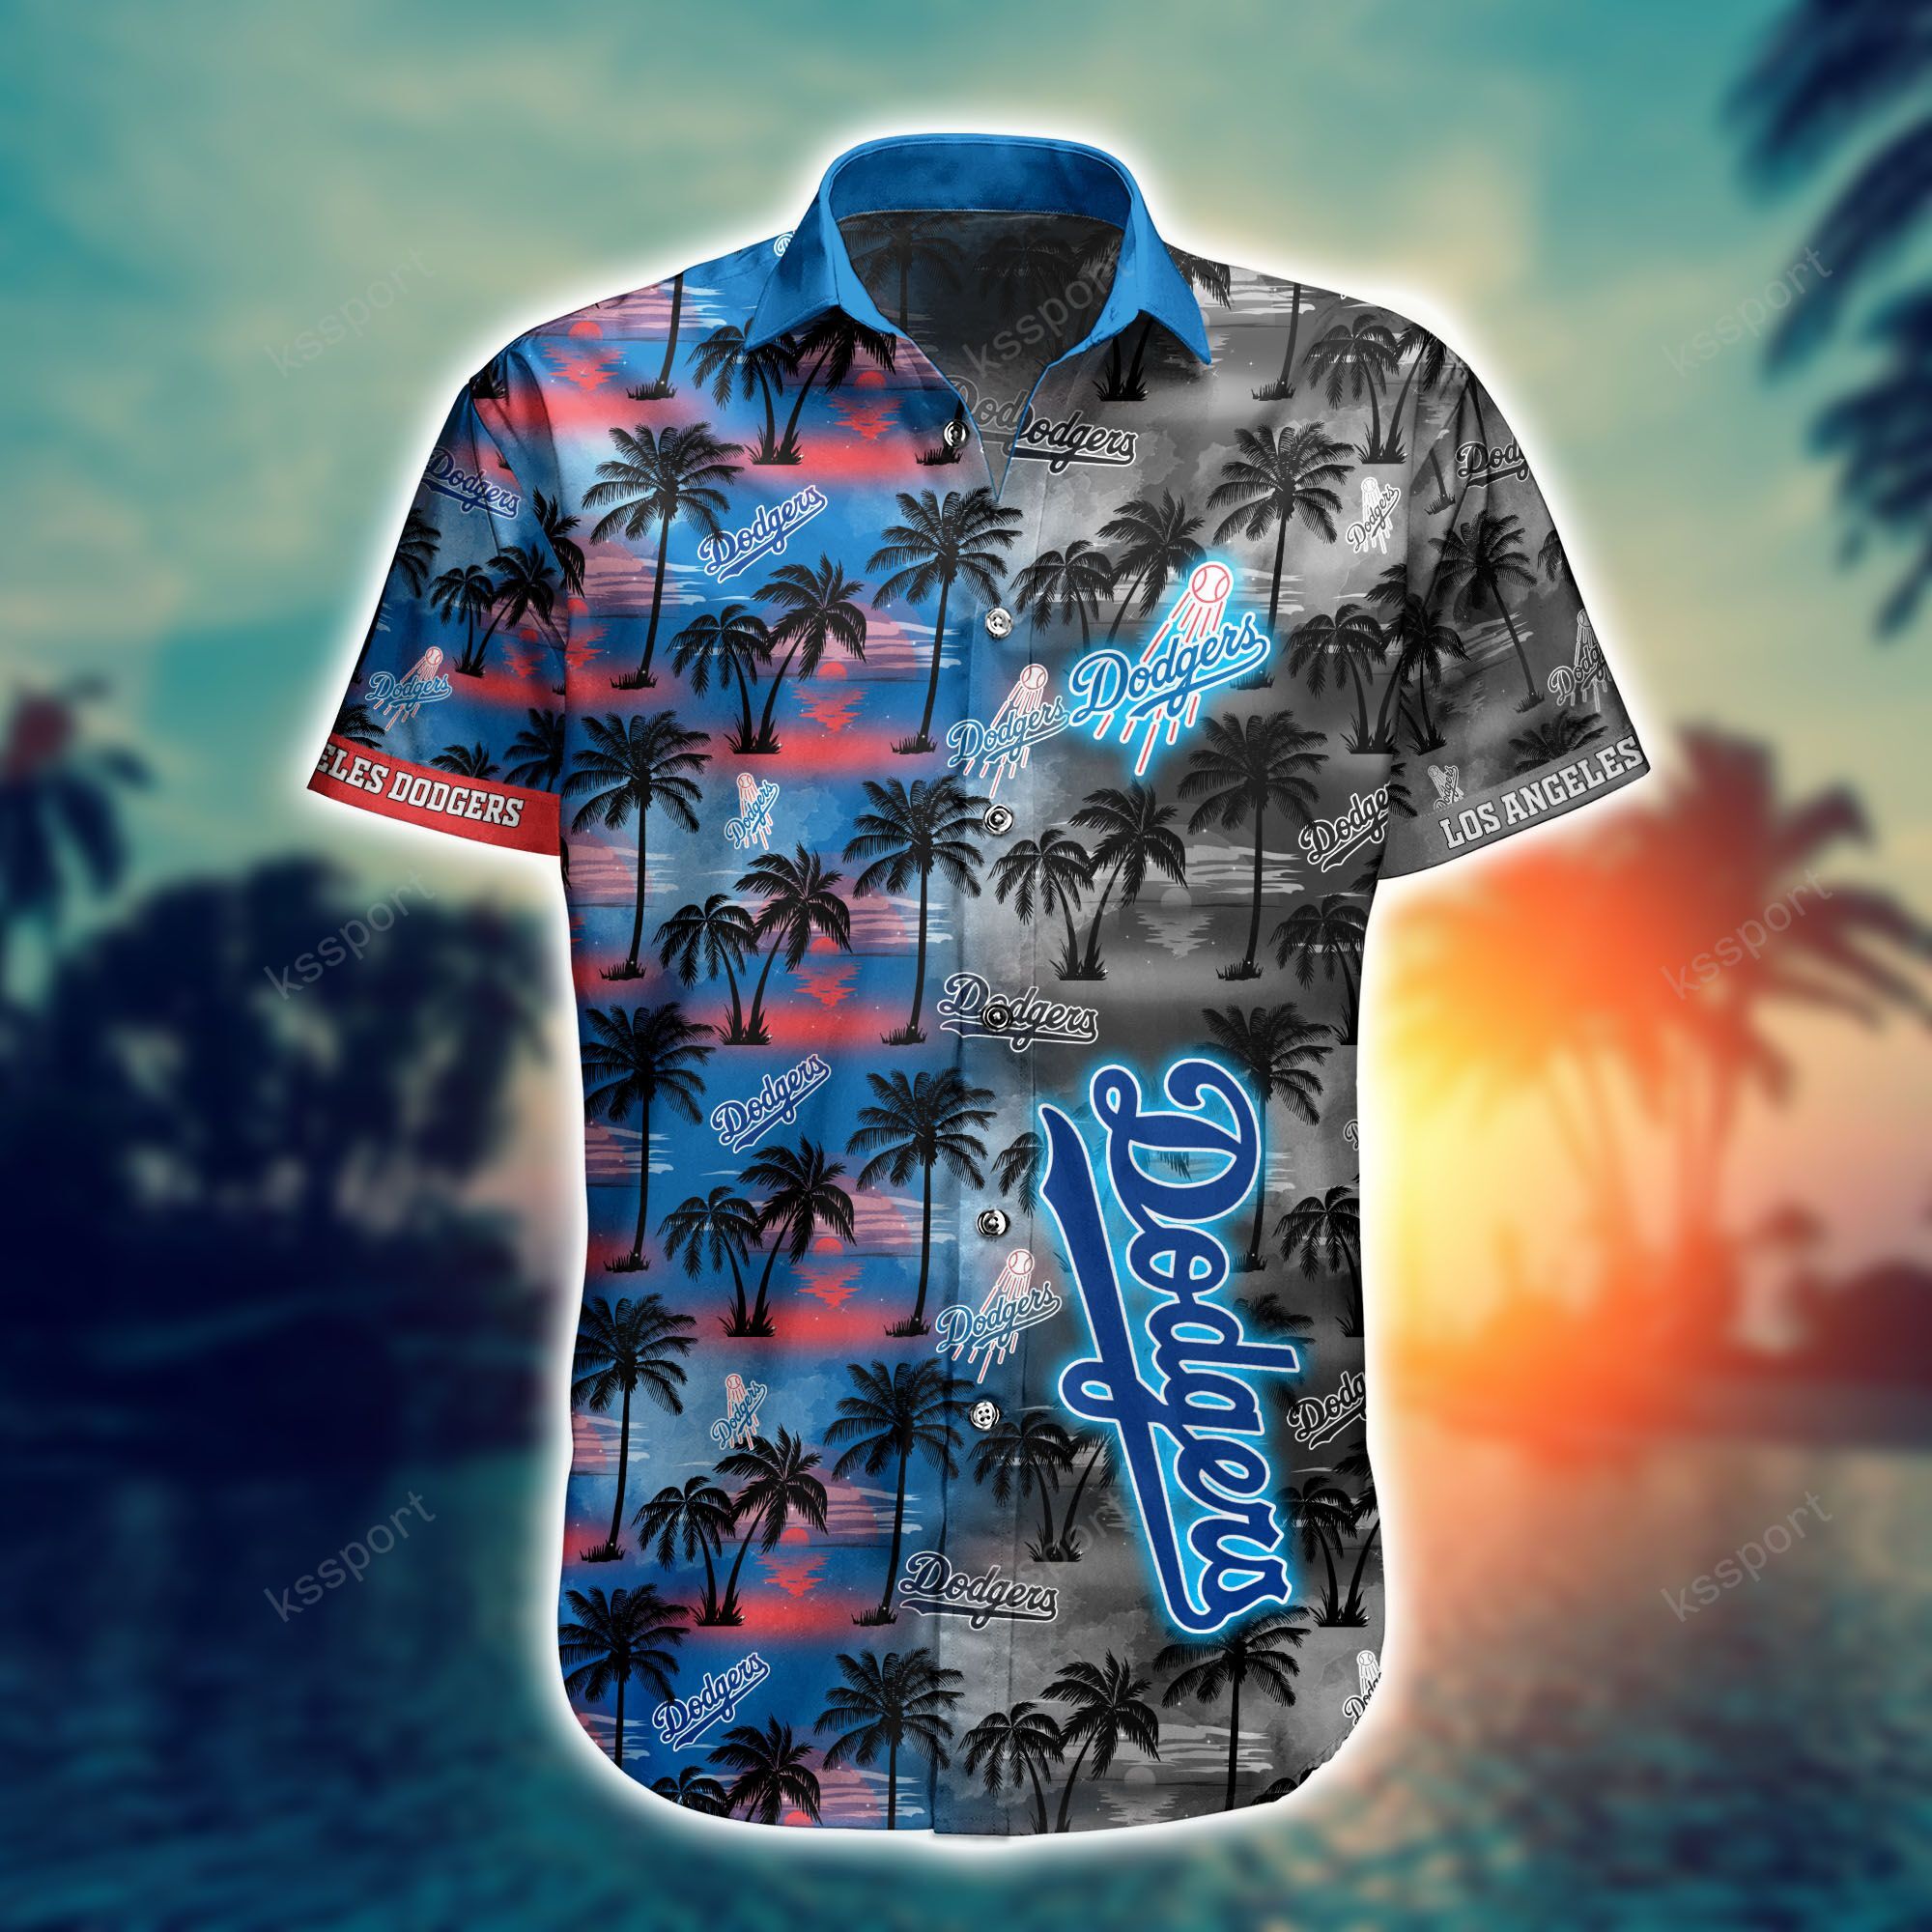 Hawaiian shirt and shorts is a great way to look stylish at a beach party 150